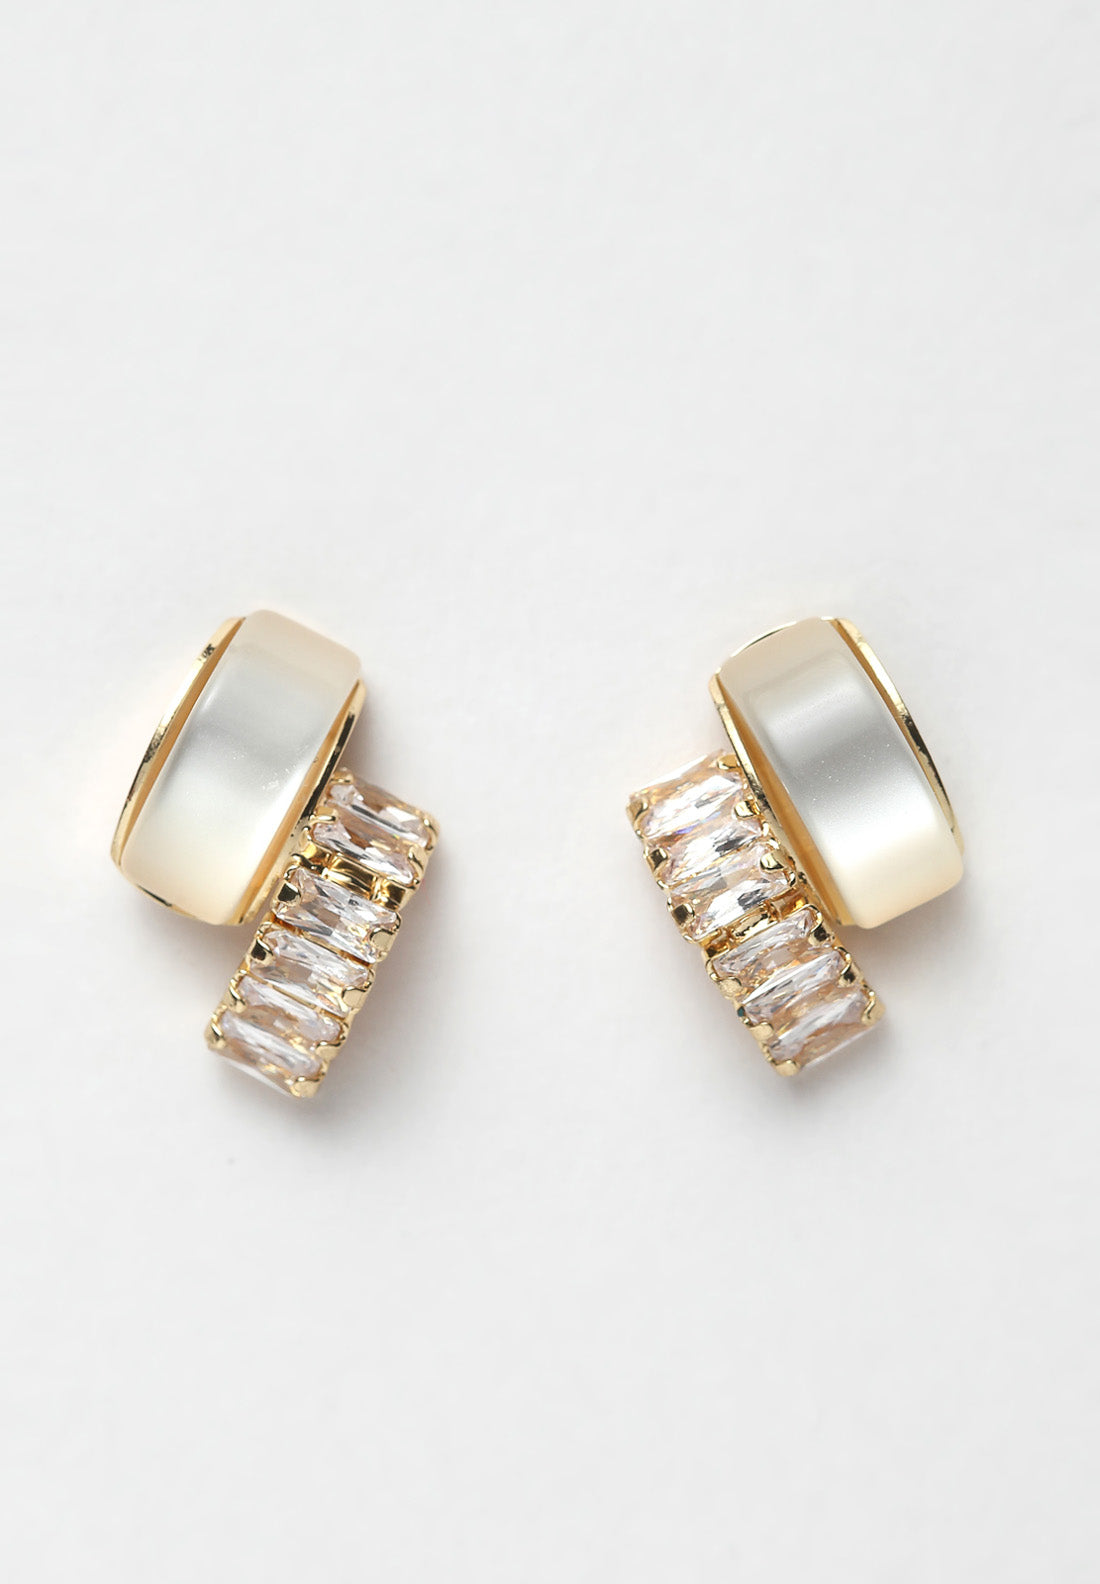 Gold & White Crystal Stud Earrings